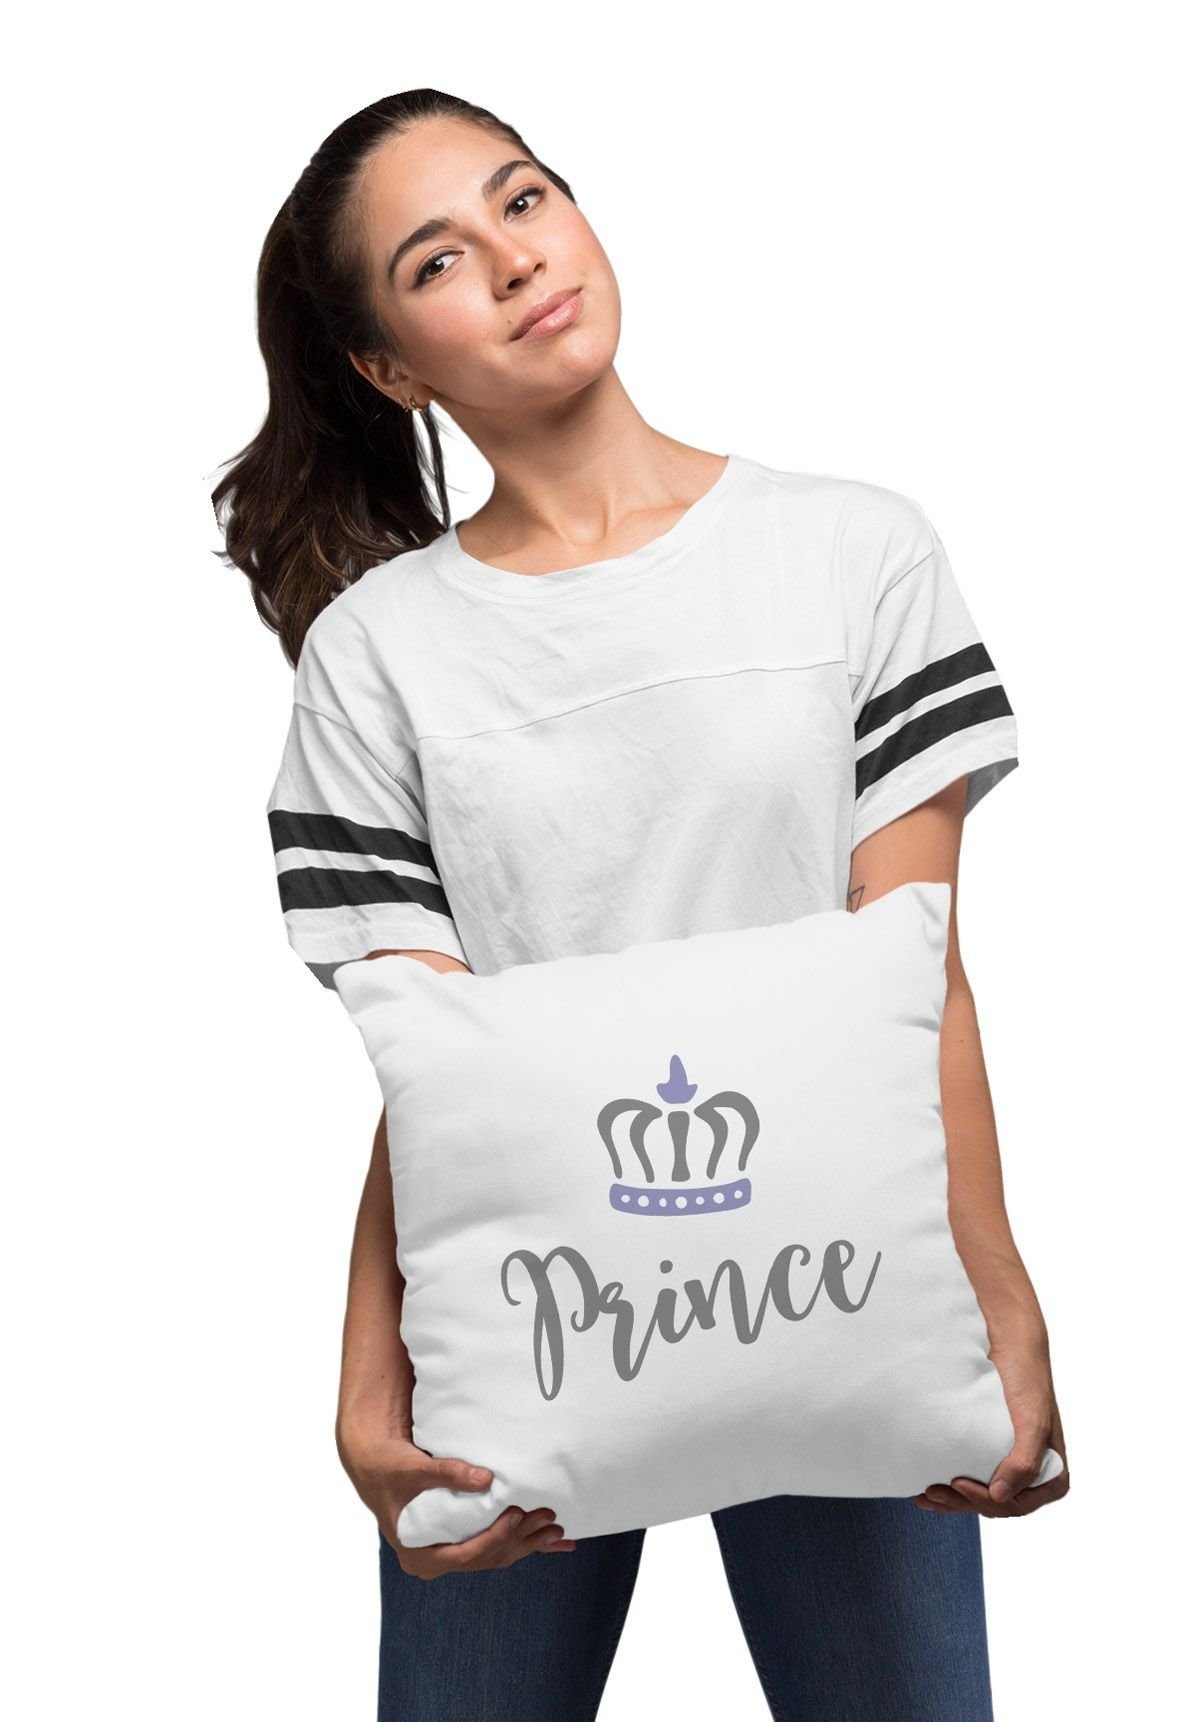 Baumwolle Prince Partner Deko-Kissen Dekokissen weiß MoonWorks MoonWorks® Paare Princess Krone Kissen-Hülle Pärchen Kissen-Bezug Prince